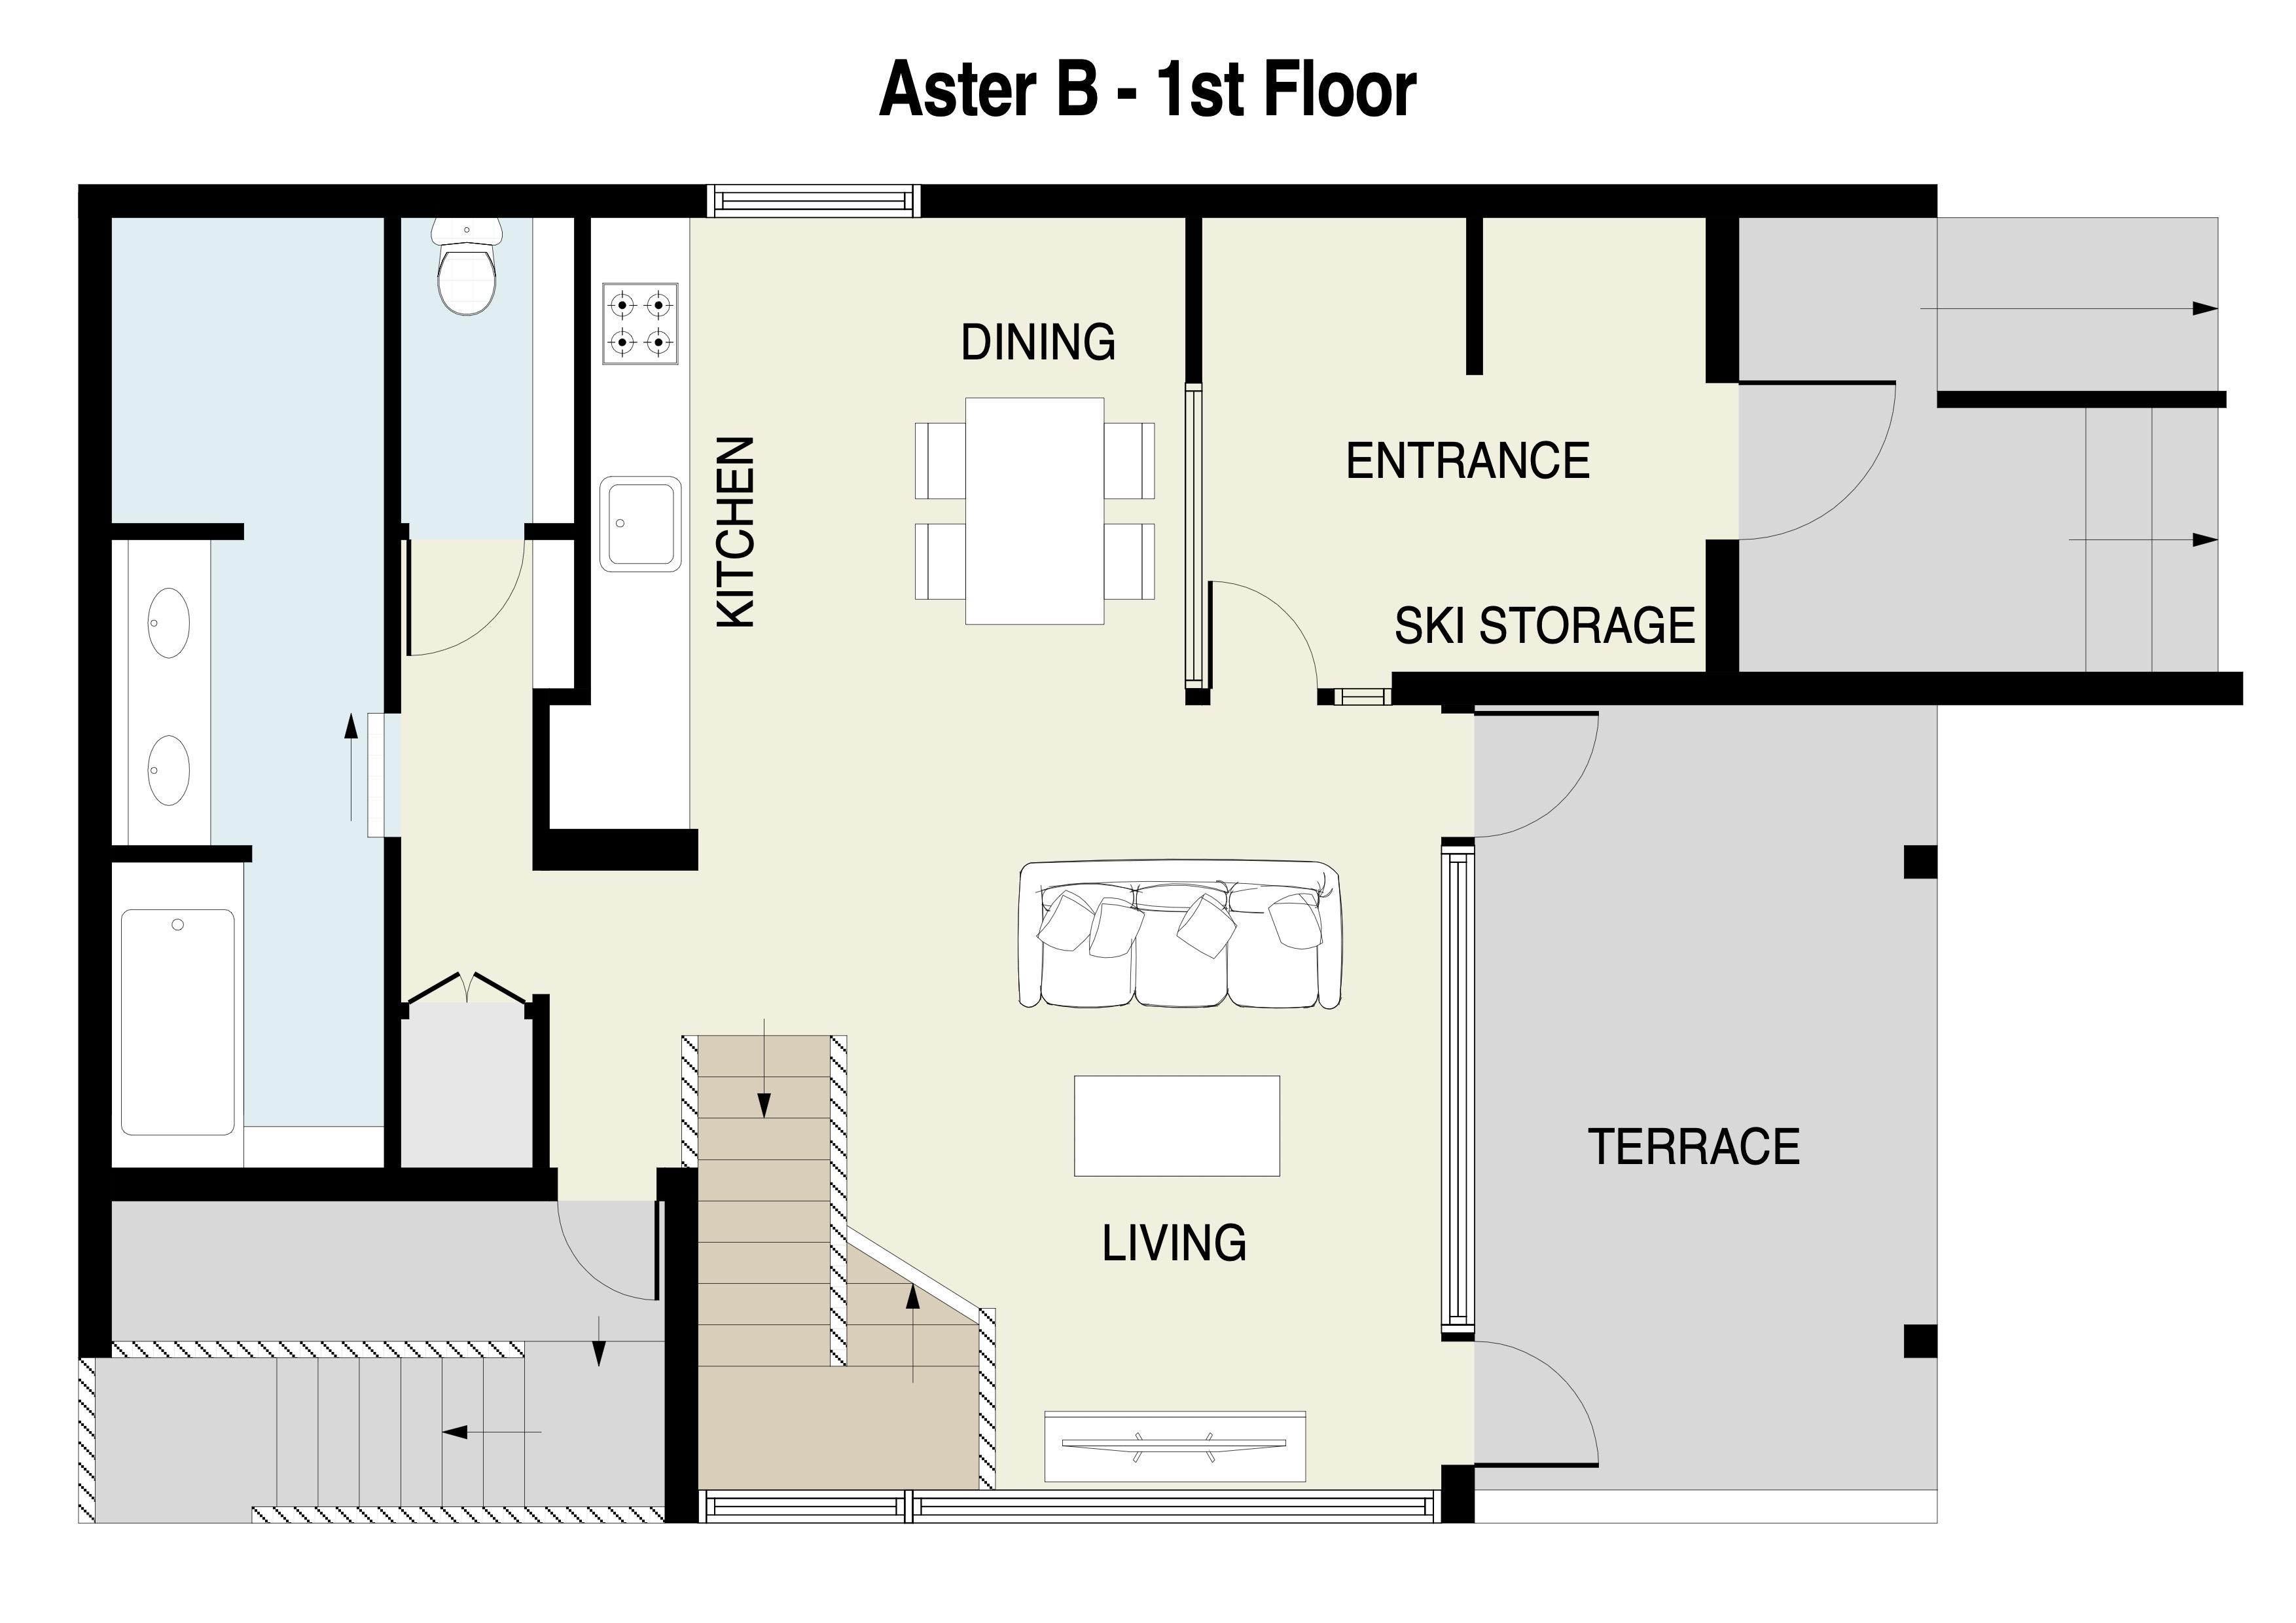 Aster B 1st Floor plan